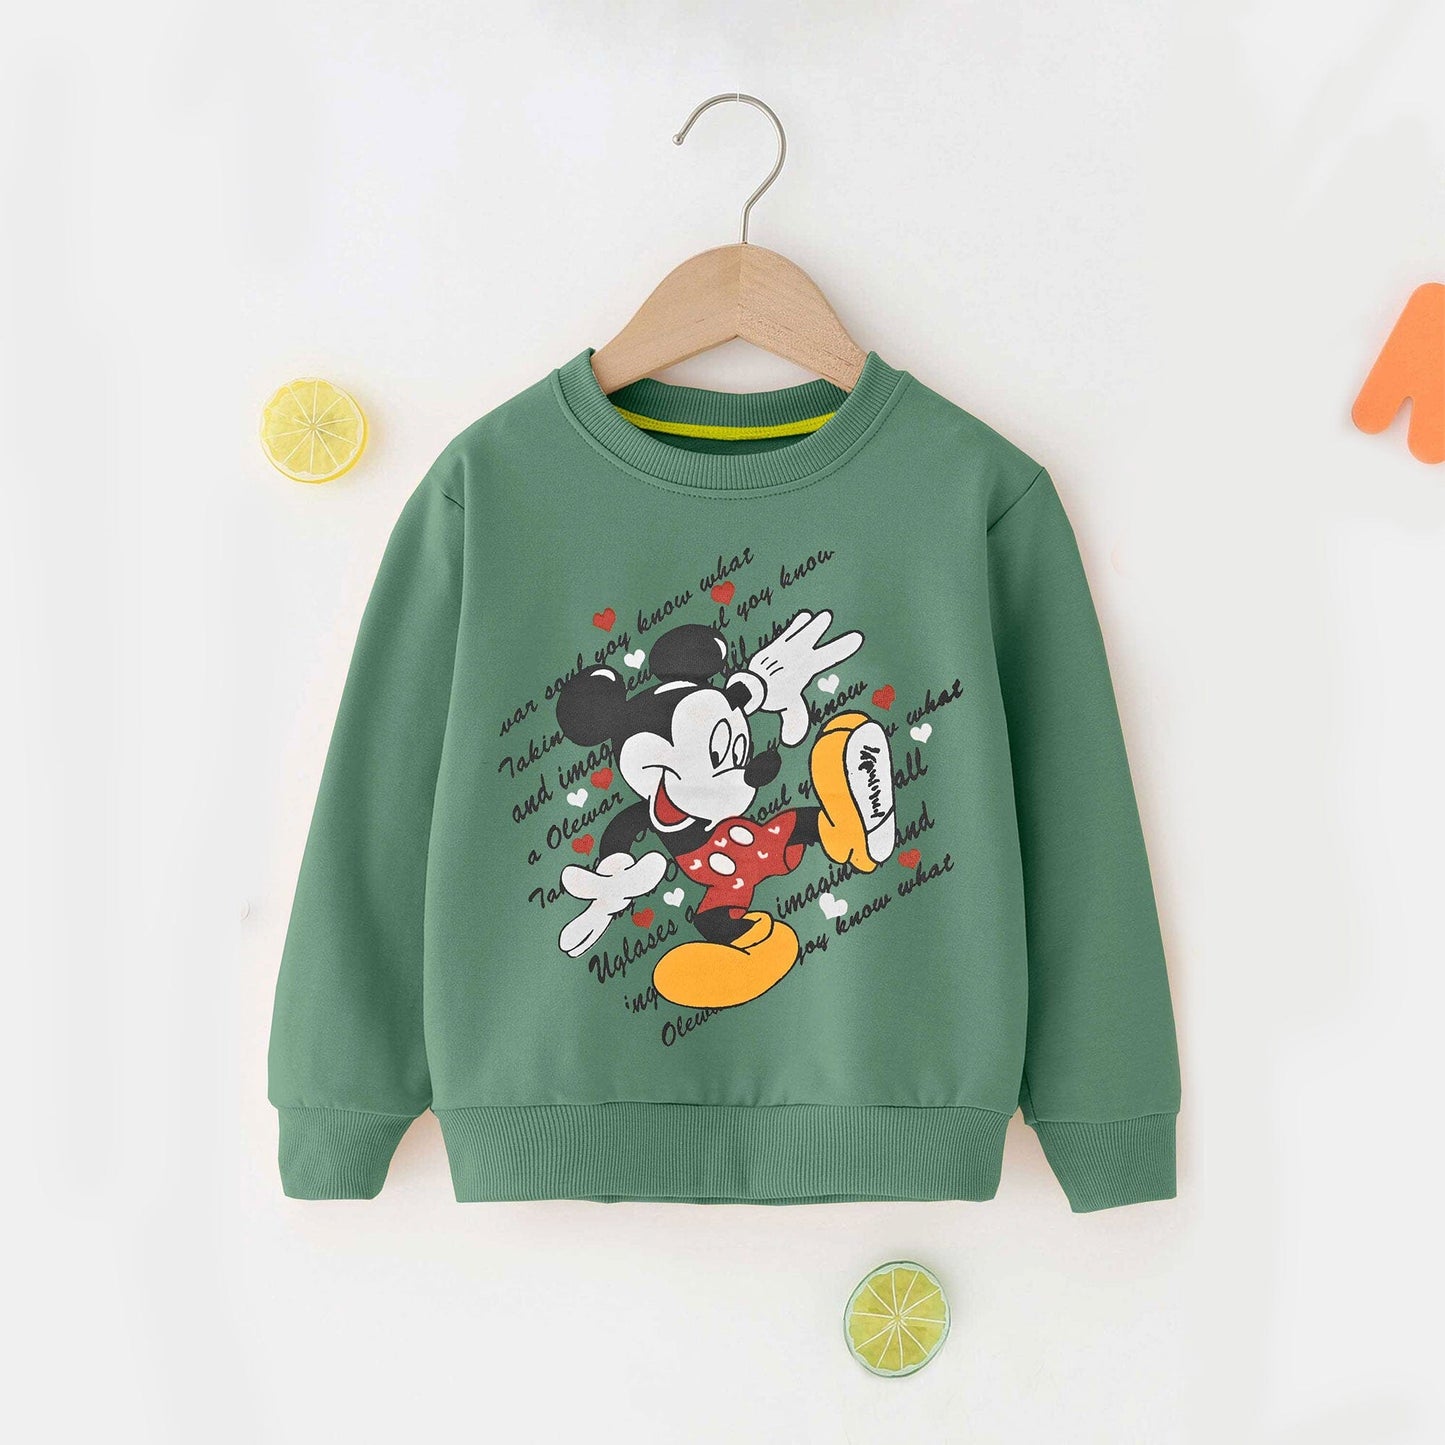 Kid's Mickey Mouse & Heart Printed Fleece Sweat Shirt Kid's Sweat Shirt ZBC Teal 1 Years 